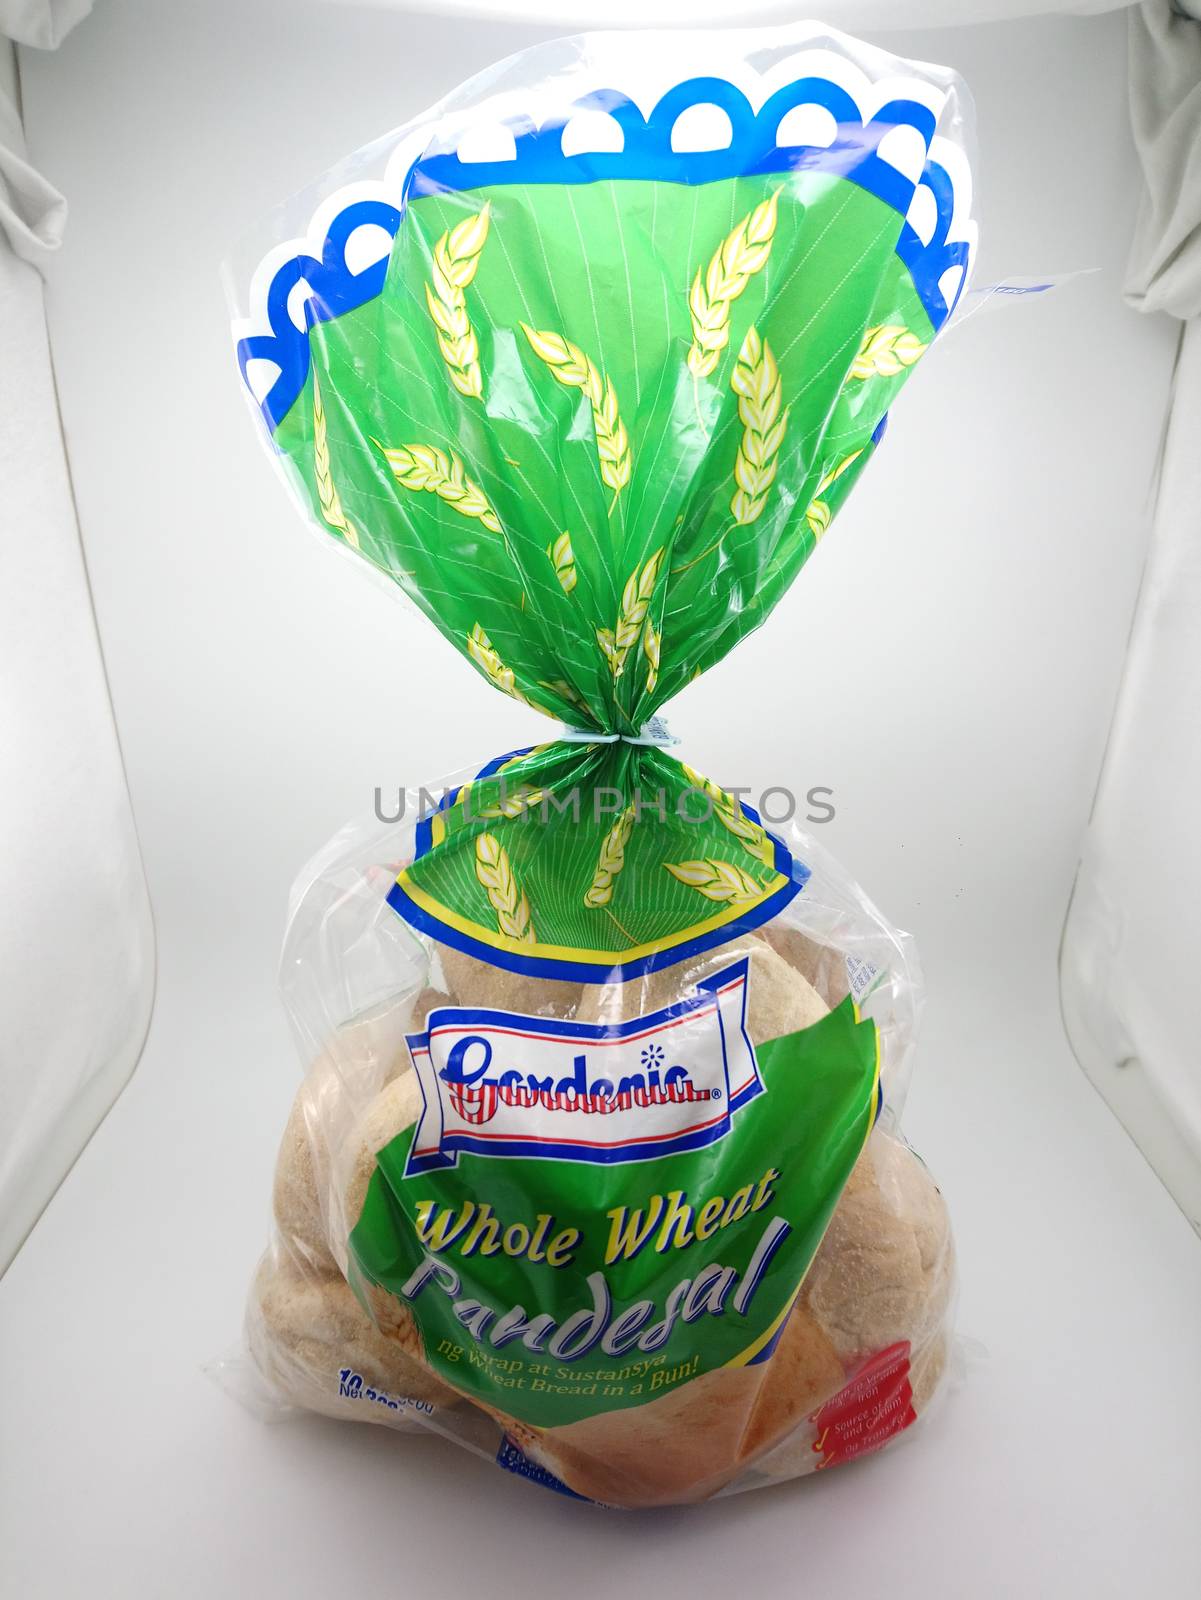 Gardenia whole wheat pandesal bread in Manila, Philippines by imwaltersy